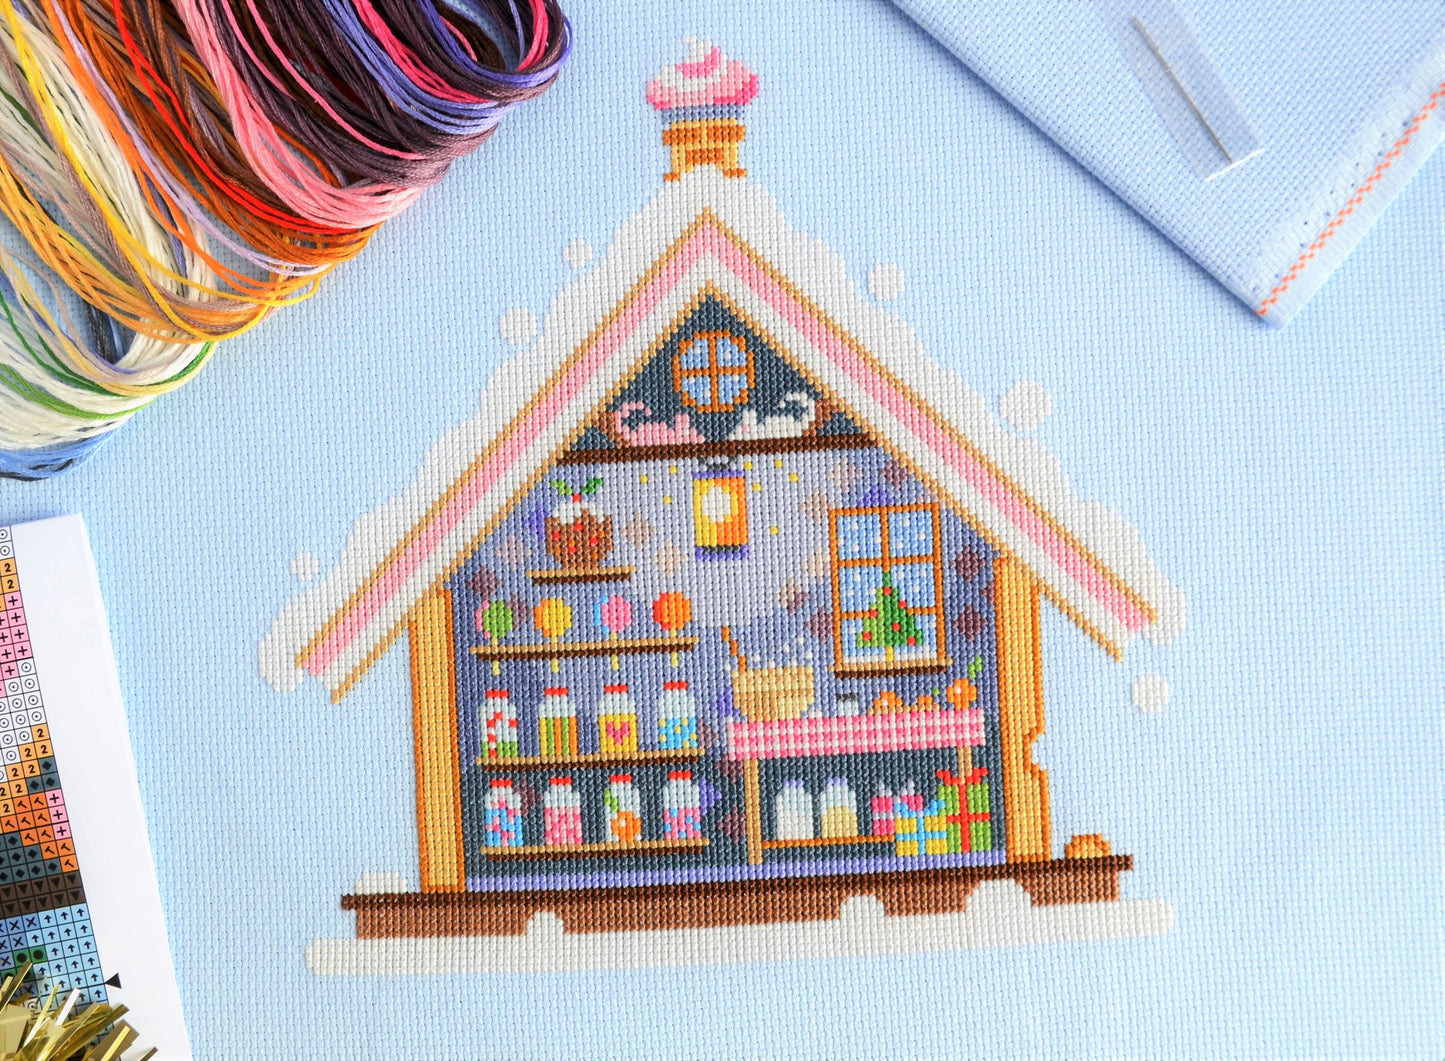 Gingerbread House Cross Stitch Kit